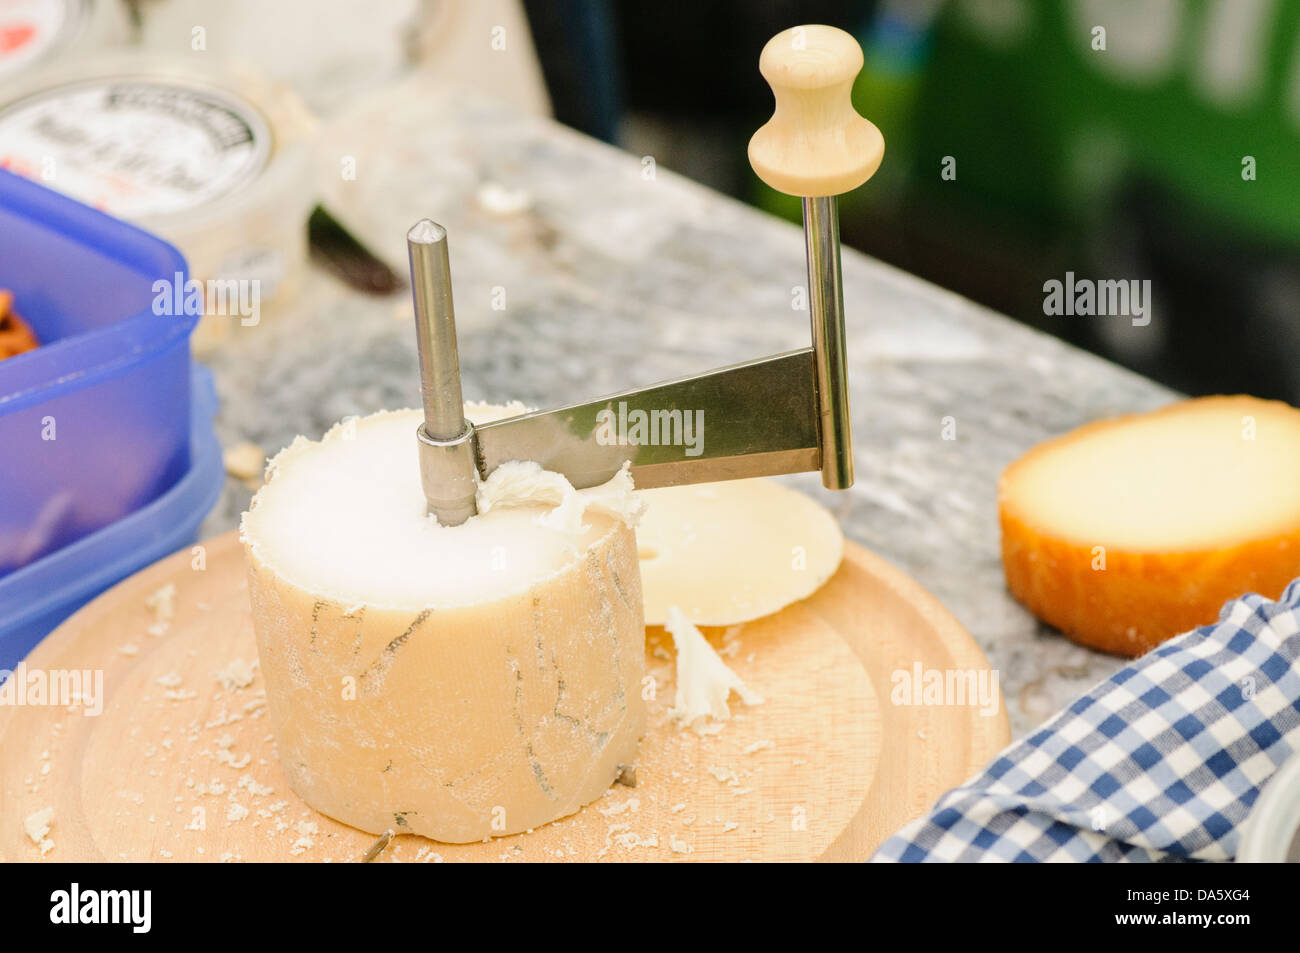 https://c8.alamy.com/comp/DA5XG4/a-rotary-cheese-grater-on-a-round-sheep-cheese-DA5XG4.jpg